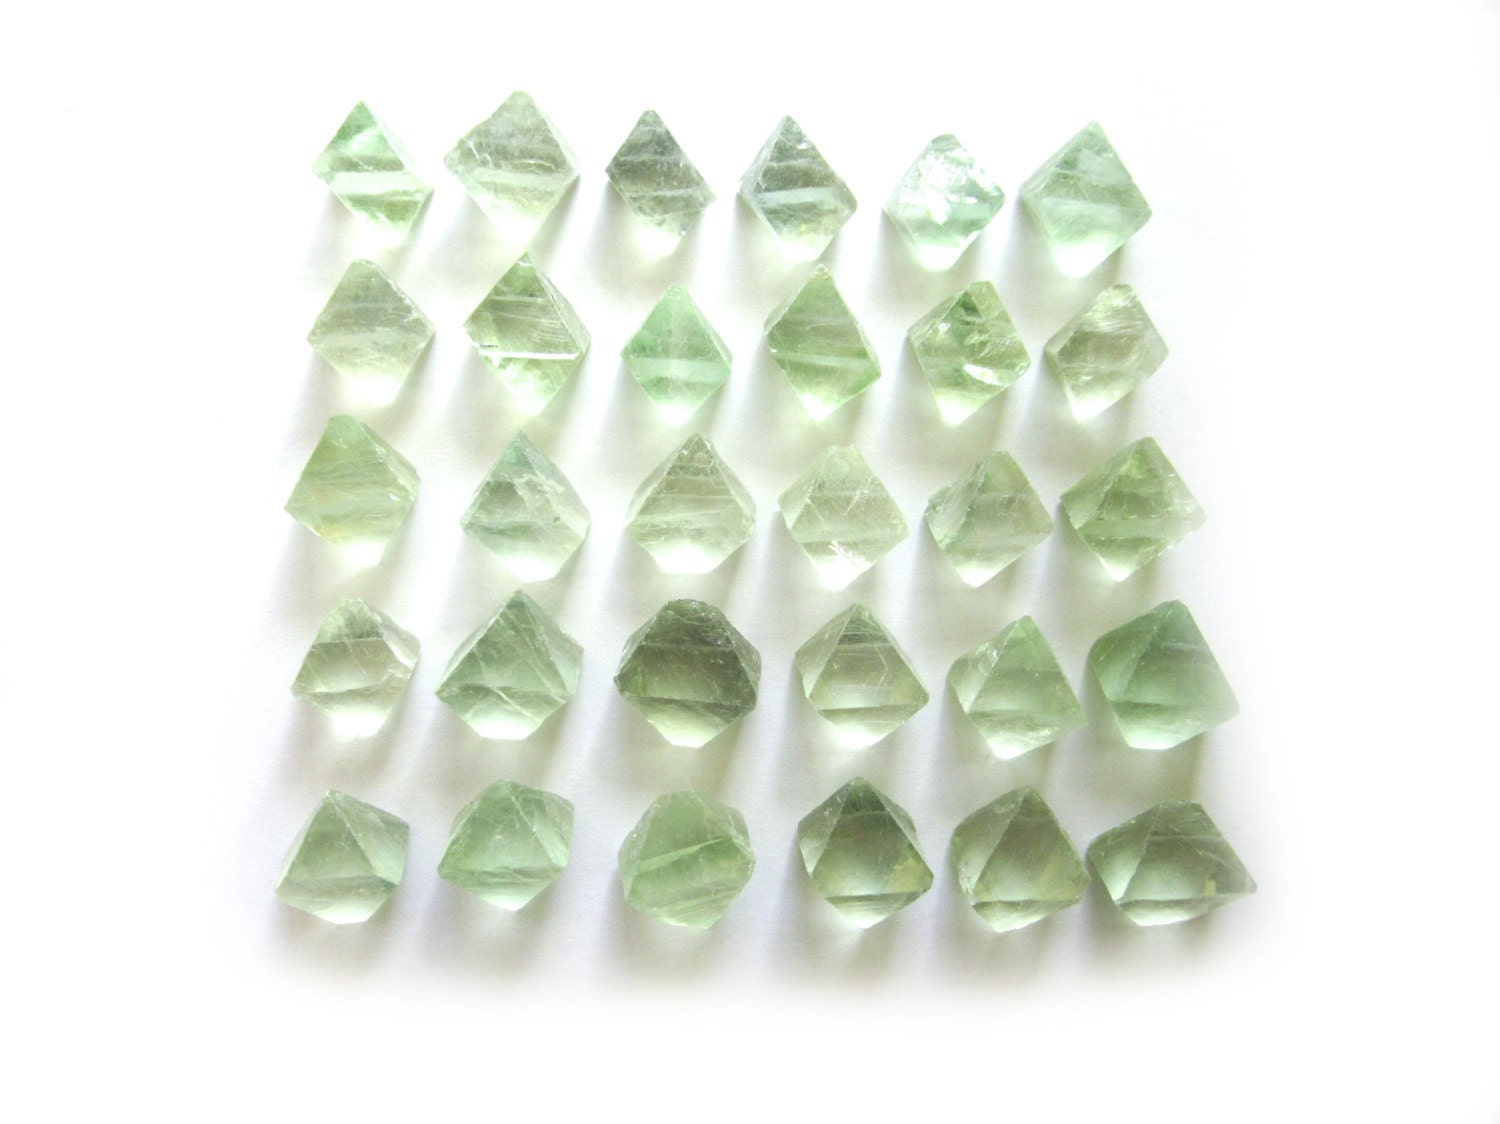 Fluorite Octahedrons Blue Green 5 Crystals 18mm - 21mm (Lot No. FL05) Rough, Raw, Natural - instantkarmashop